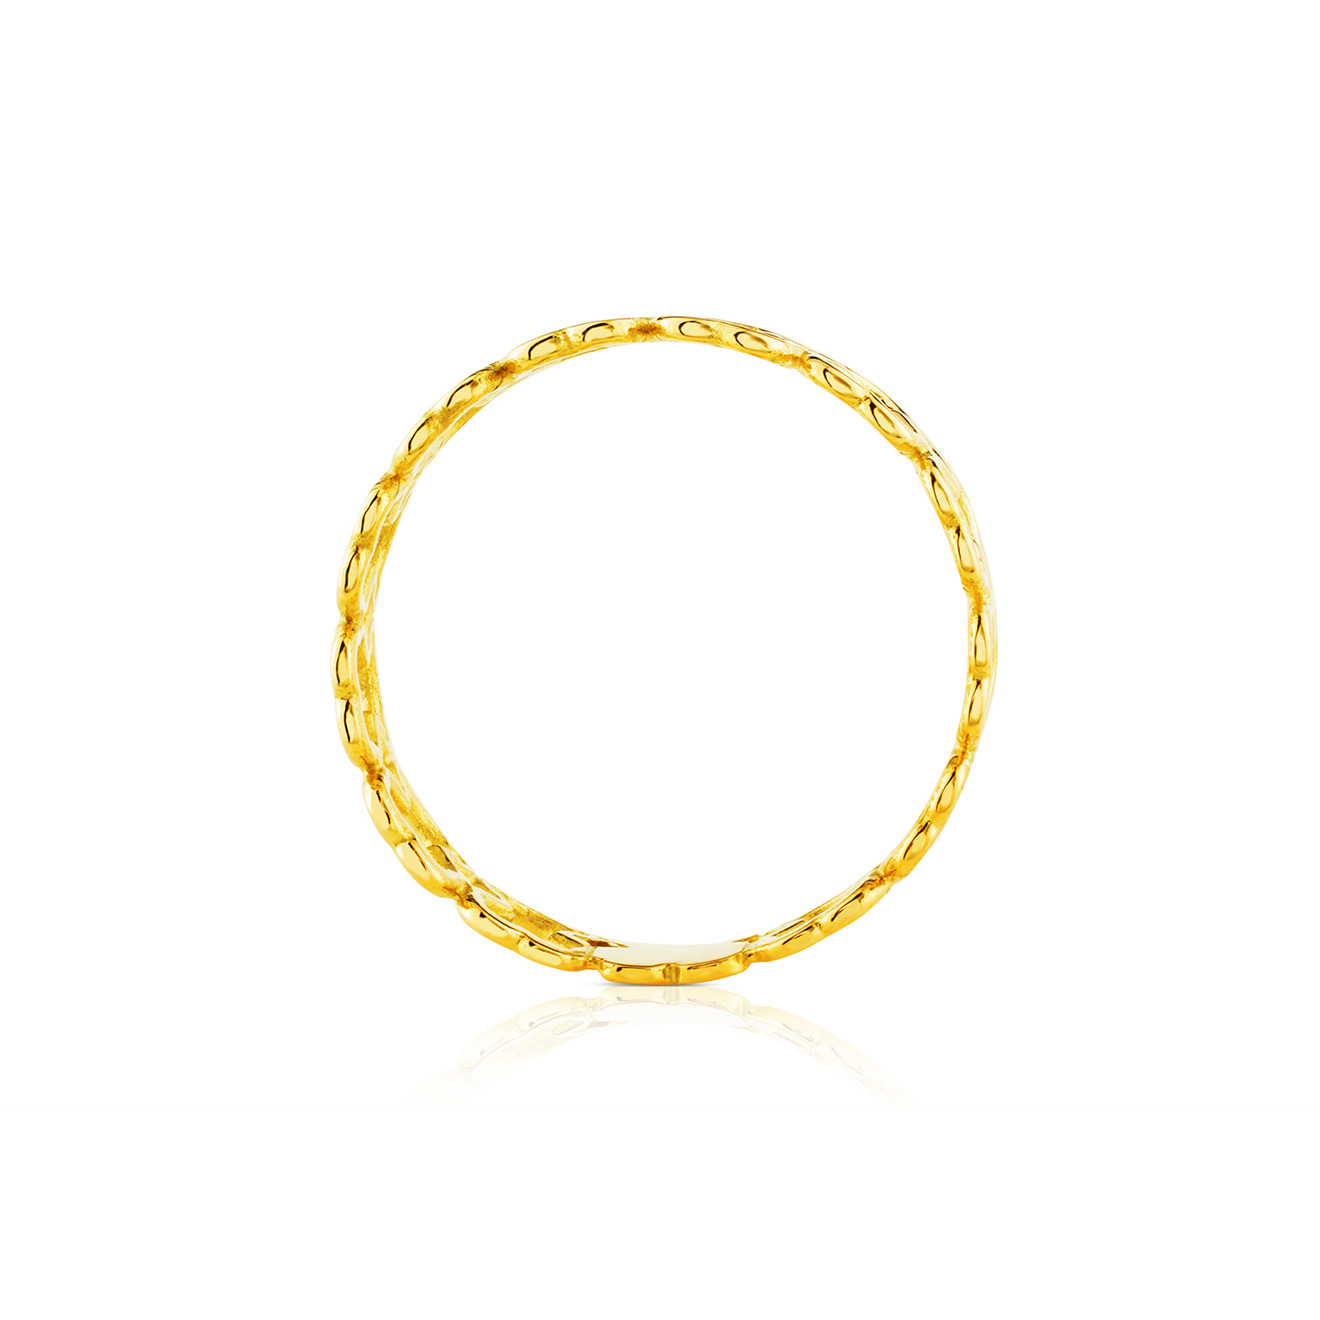 Silueta bear ring in yellow gold – buy at Poison Drop online store, SKU